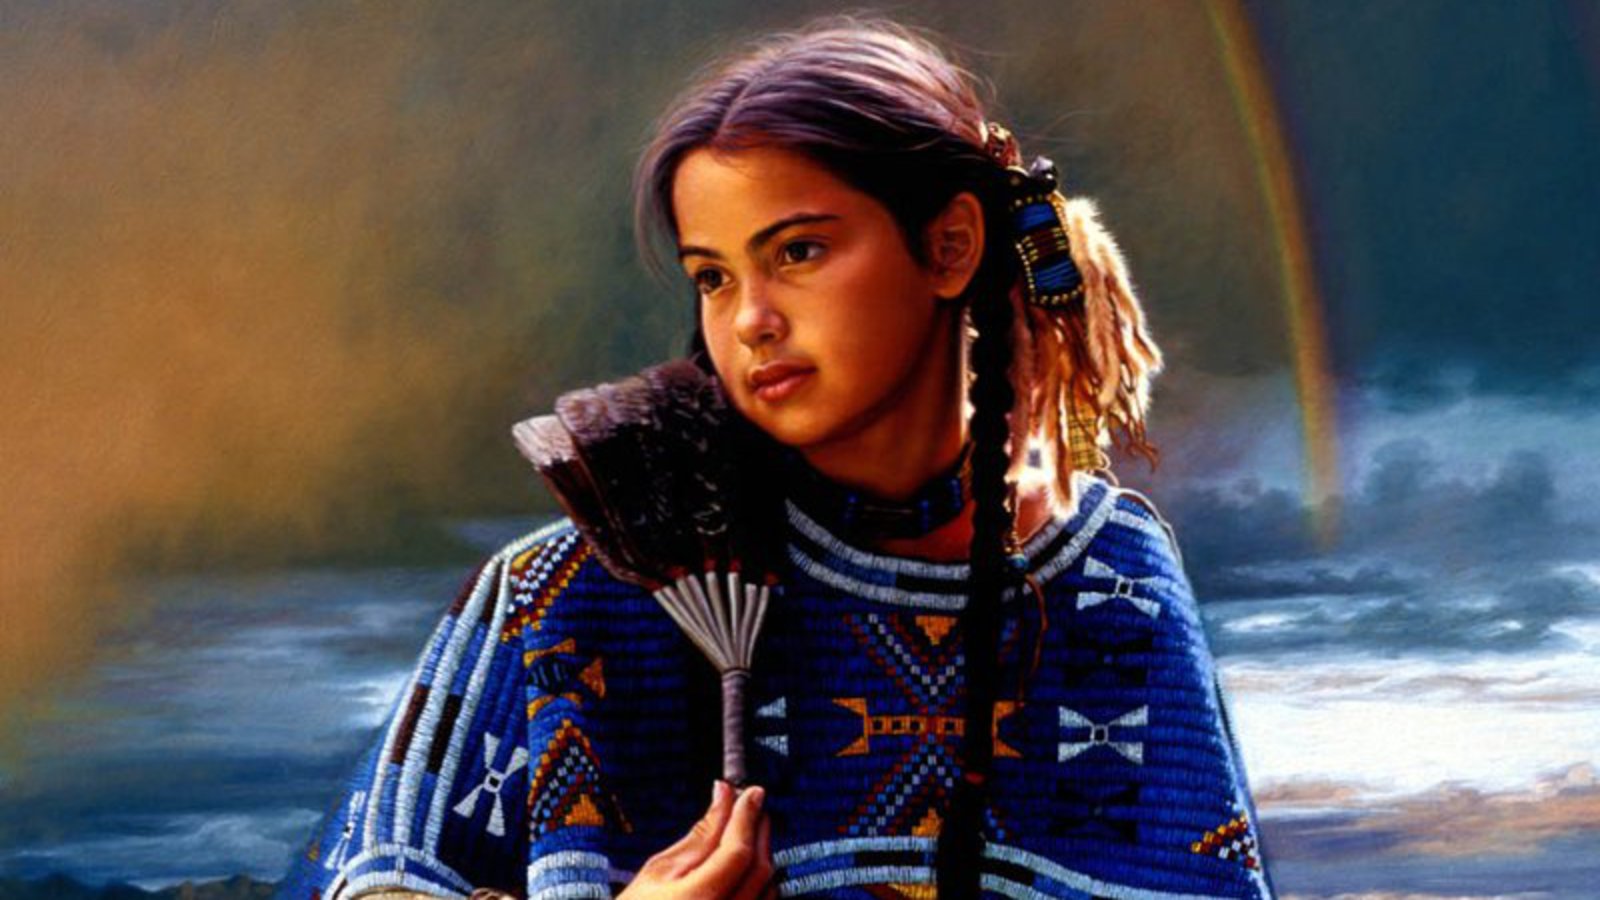 Young Native American Teen Girls